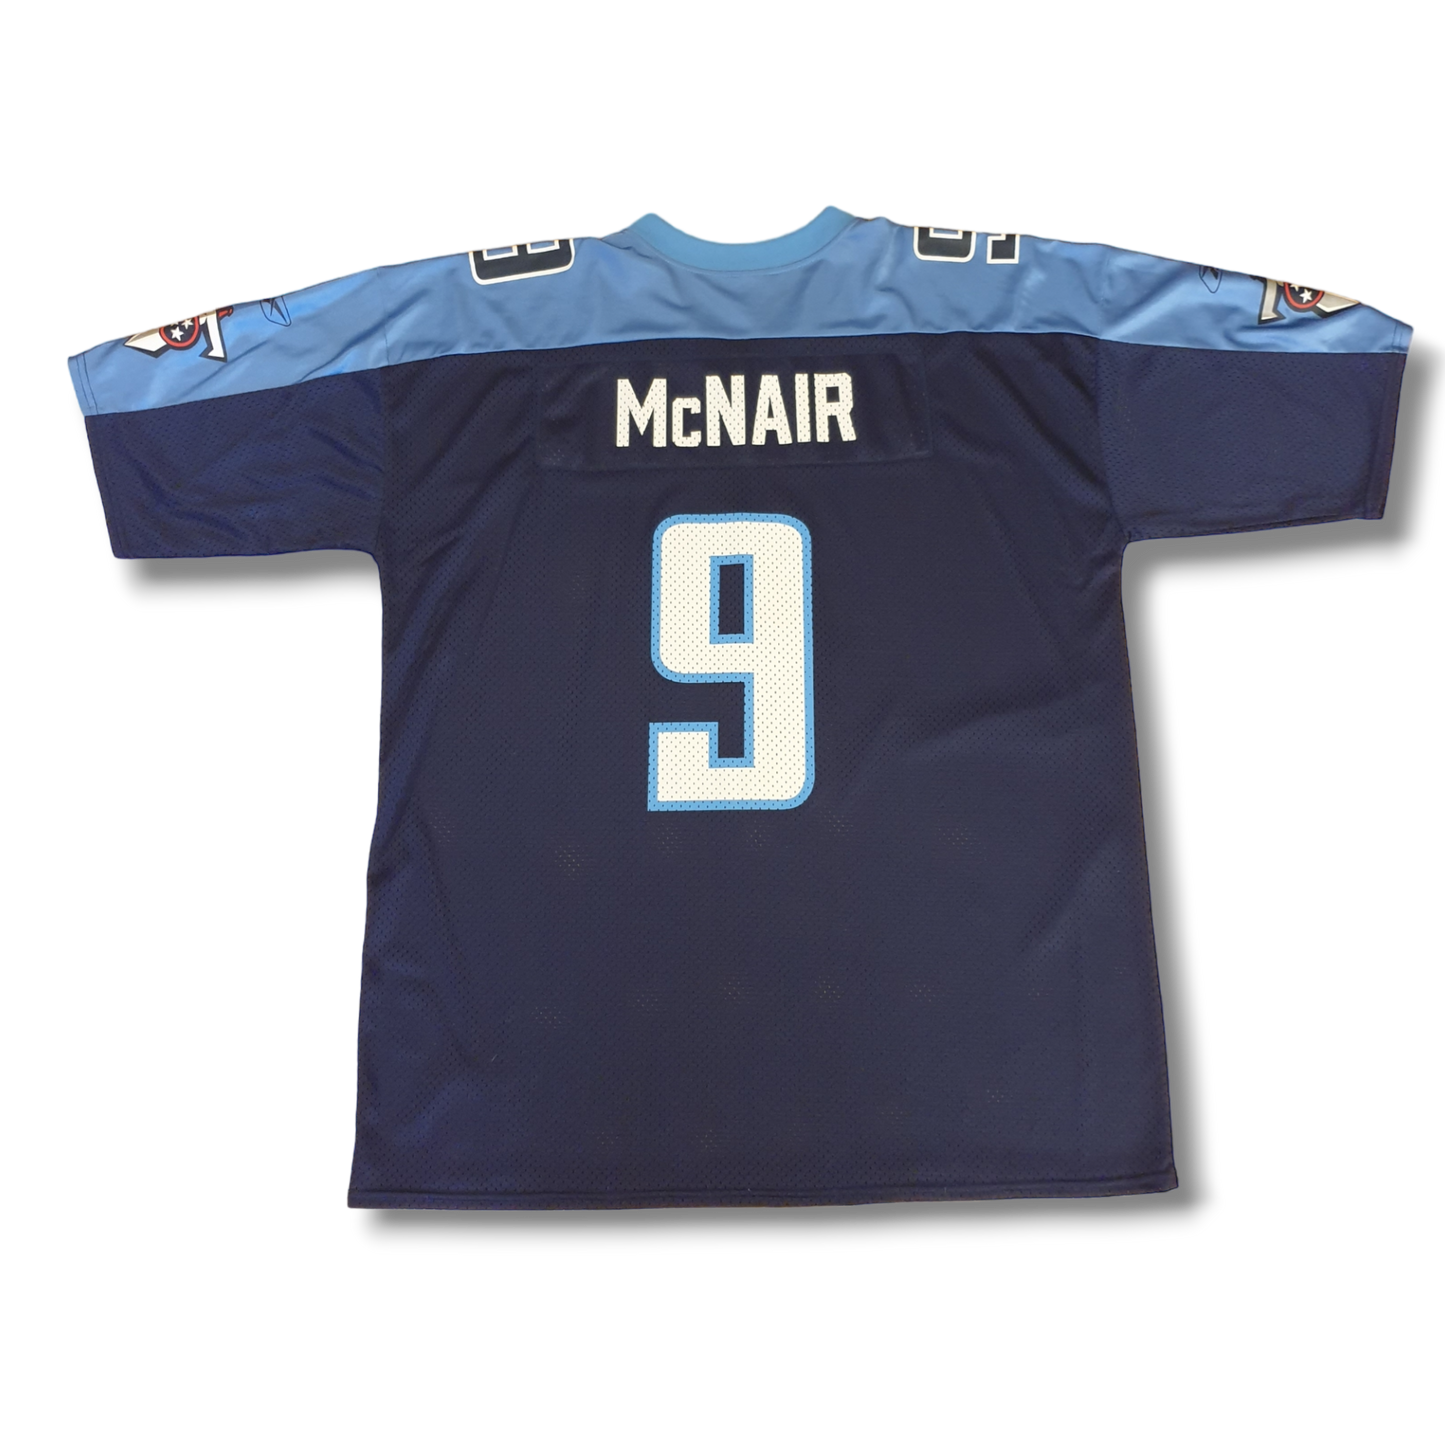 NFL Titans Mesh Jersey McNair 9 🏈 XXL